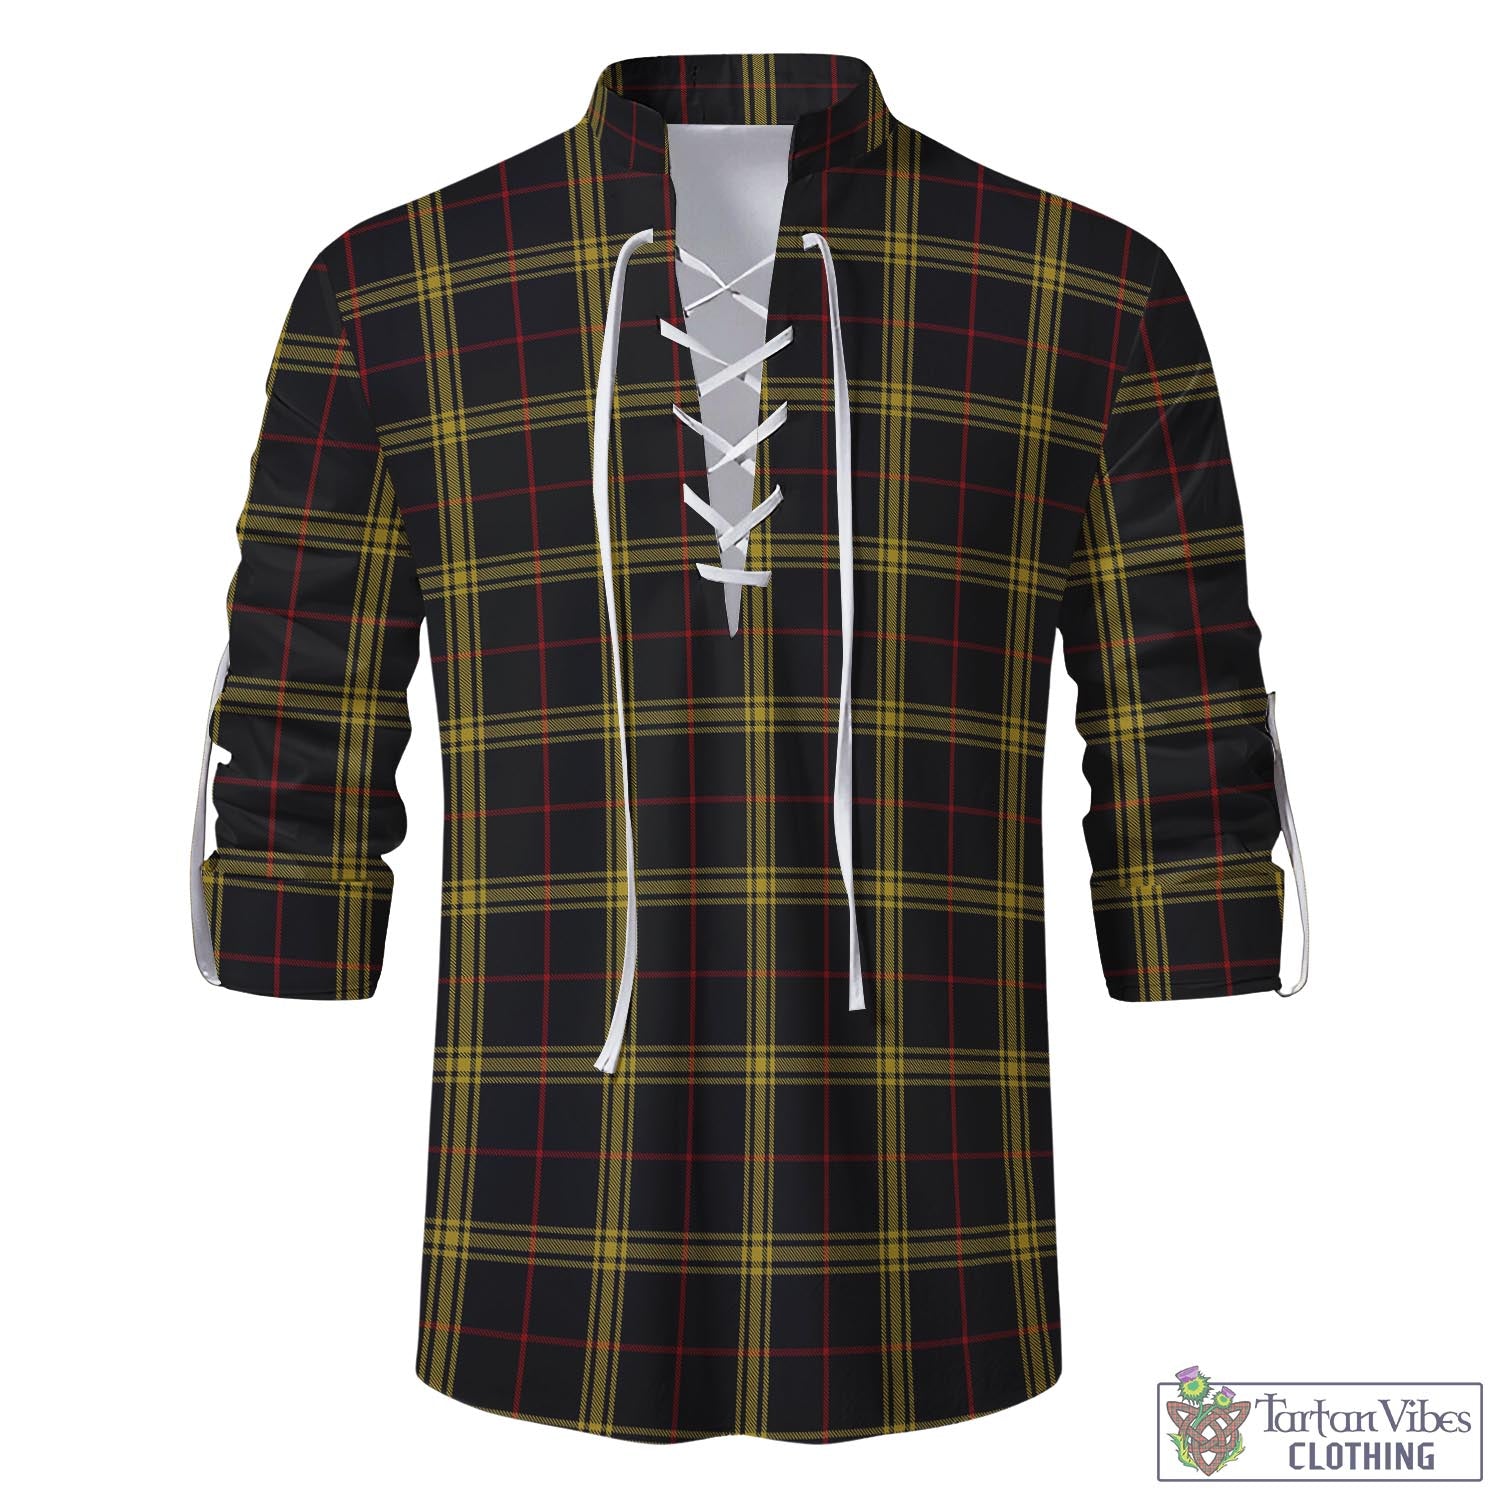 Tartan Vibes Clothing Gwynn Tartan Men's Scottish Traditional Jacobite Ghillie Kilt Shirt